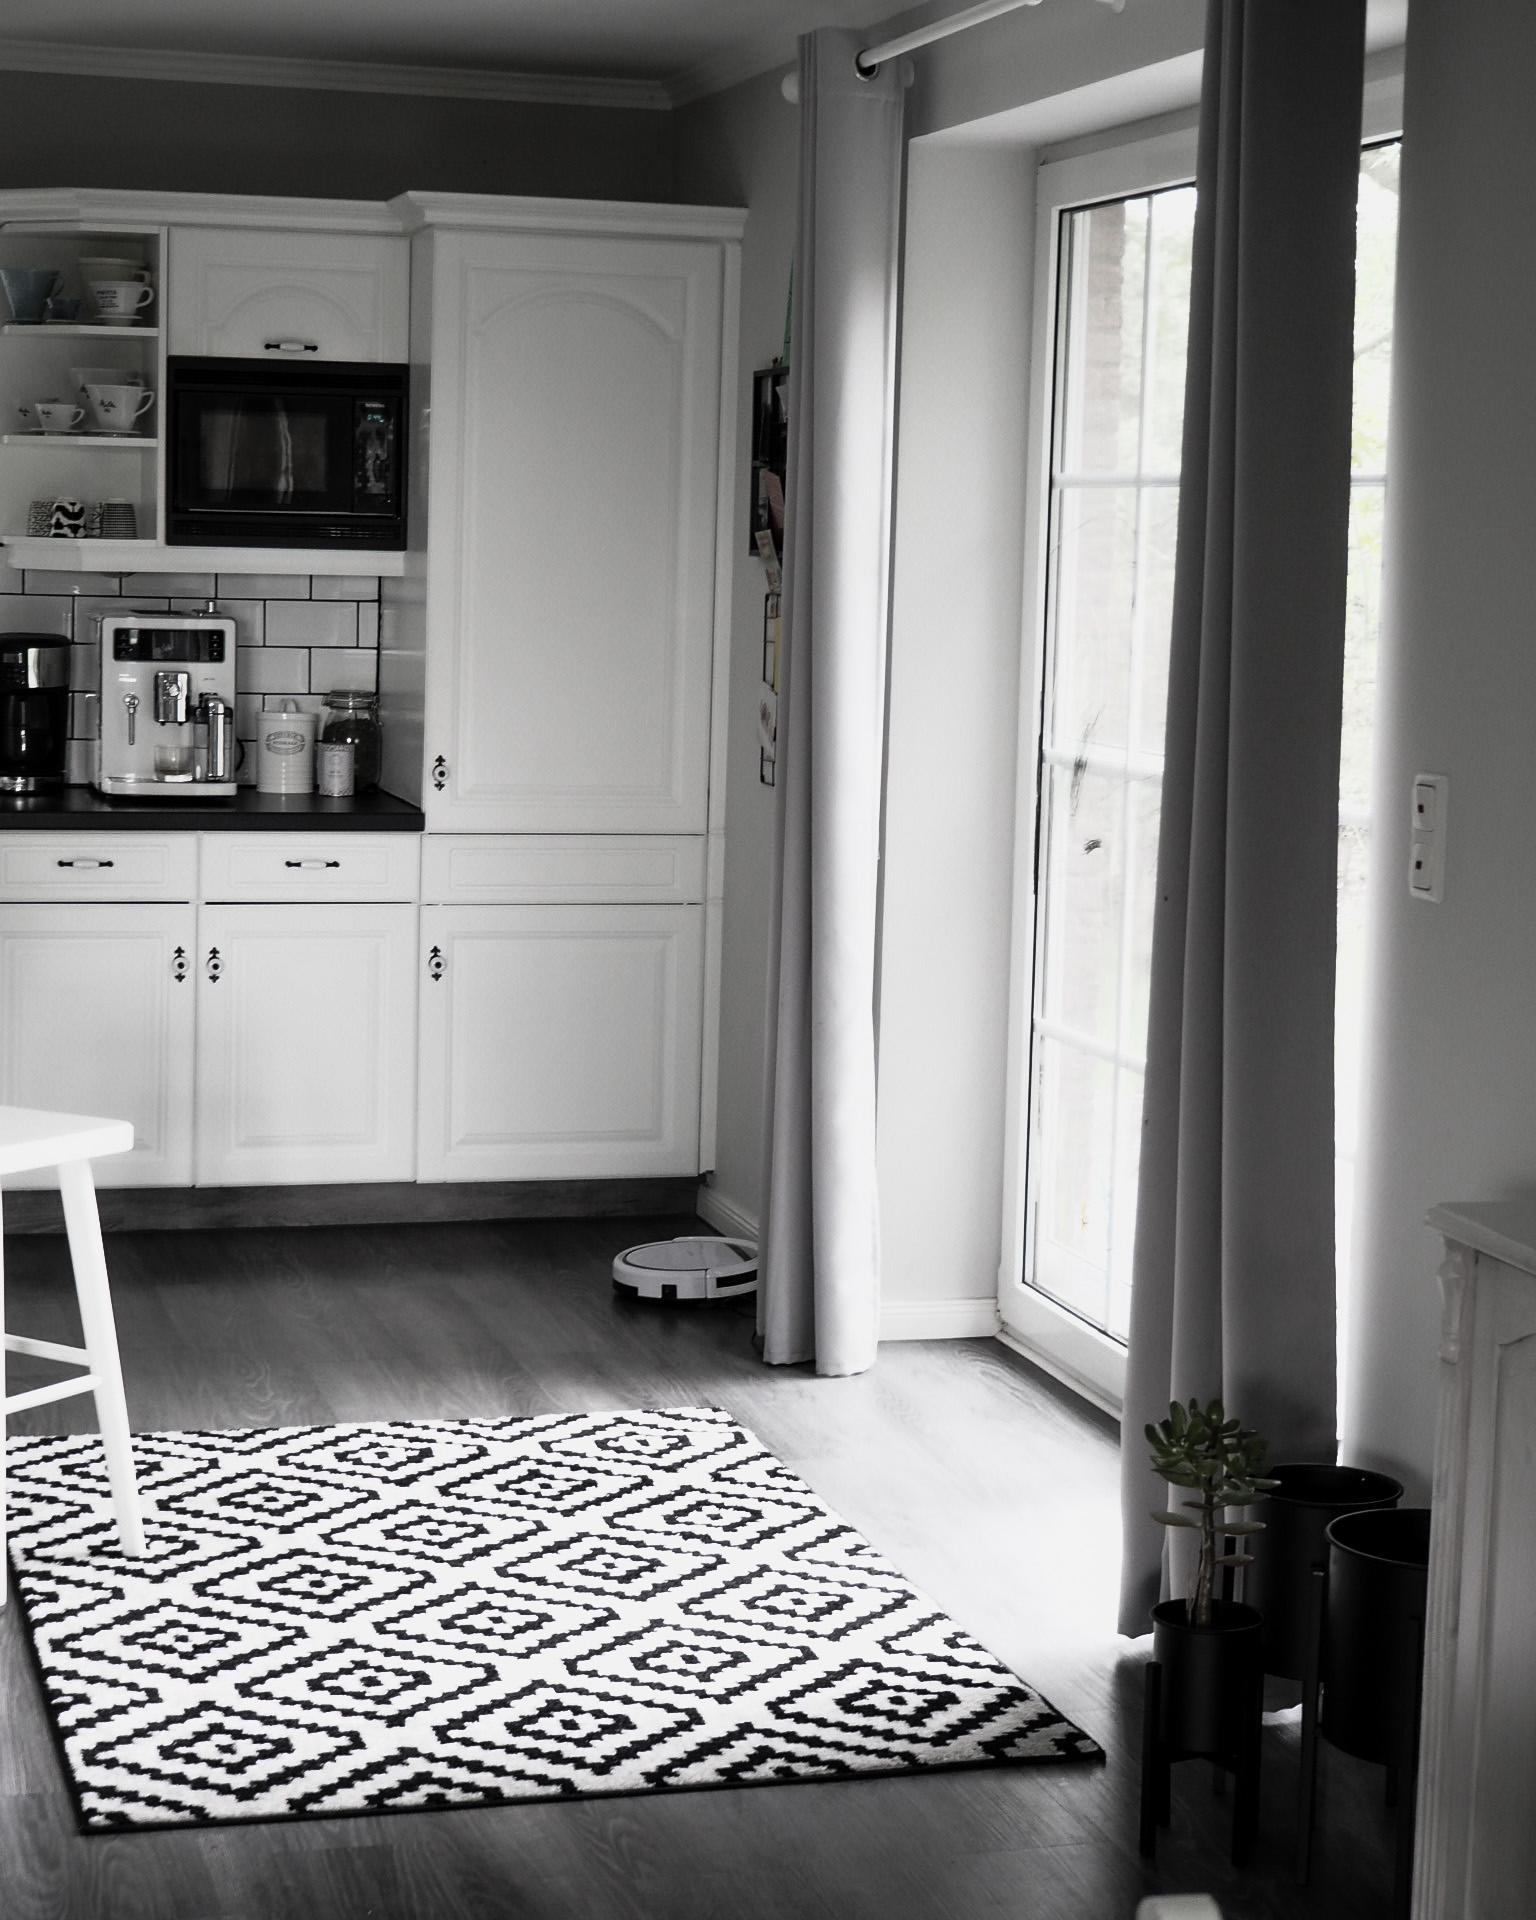 Black and white I love it #kitchen
#scandi #blackandwhiteliving
#kitcheninterior
#kitchendesign
#landhaus 